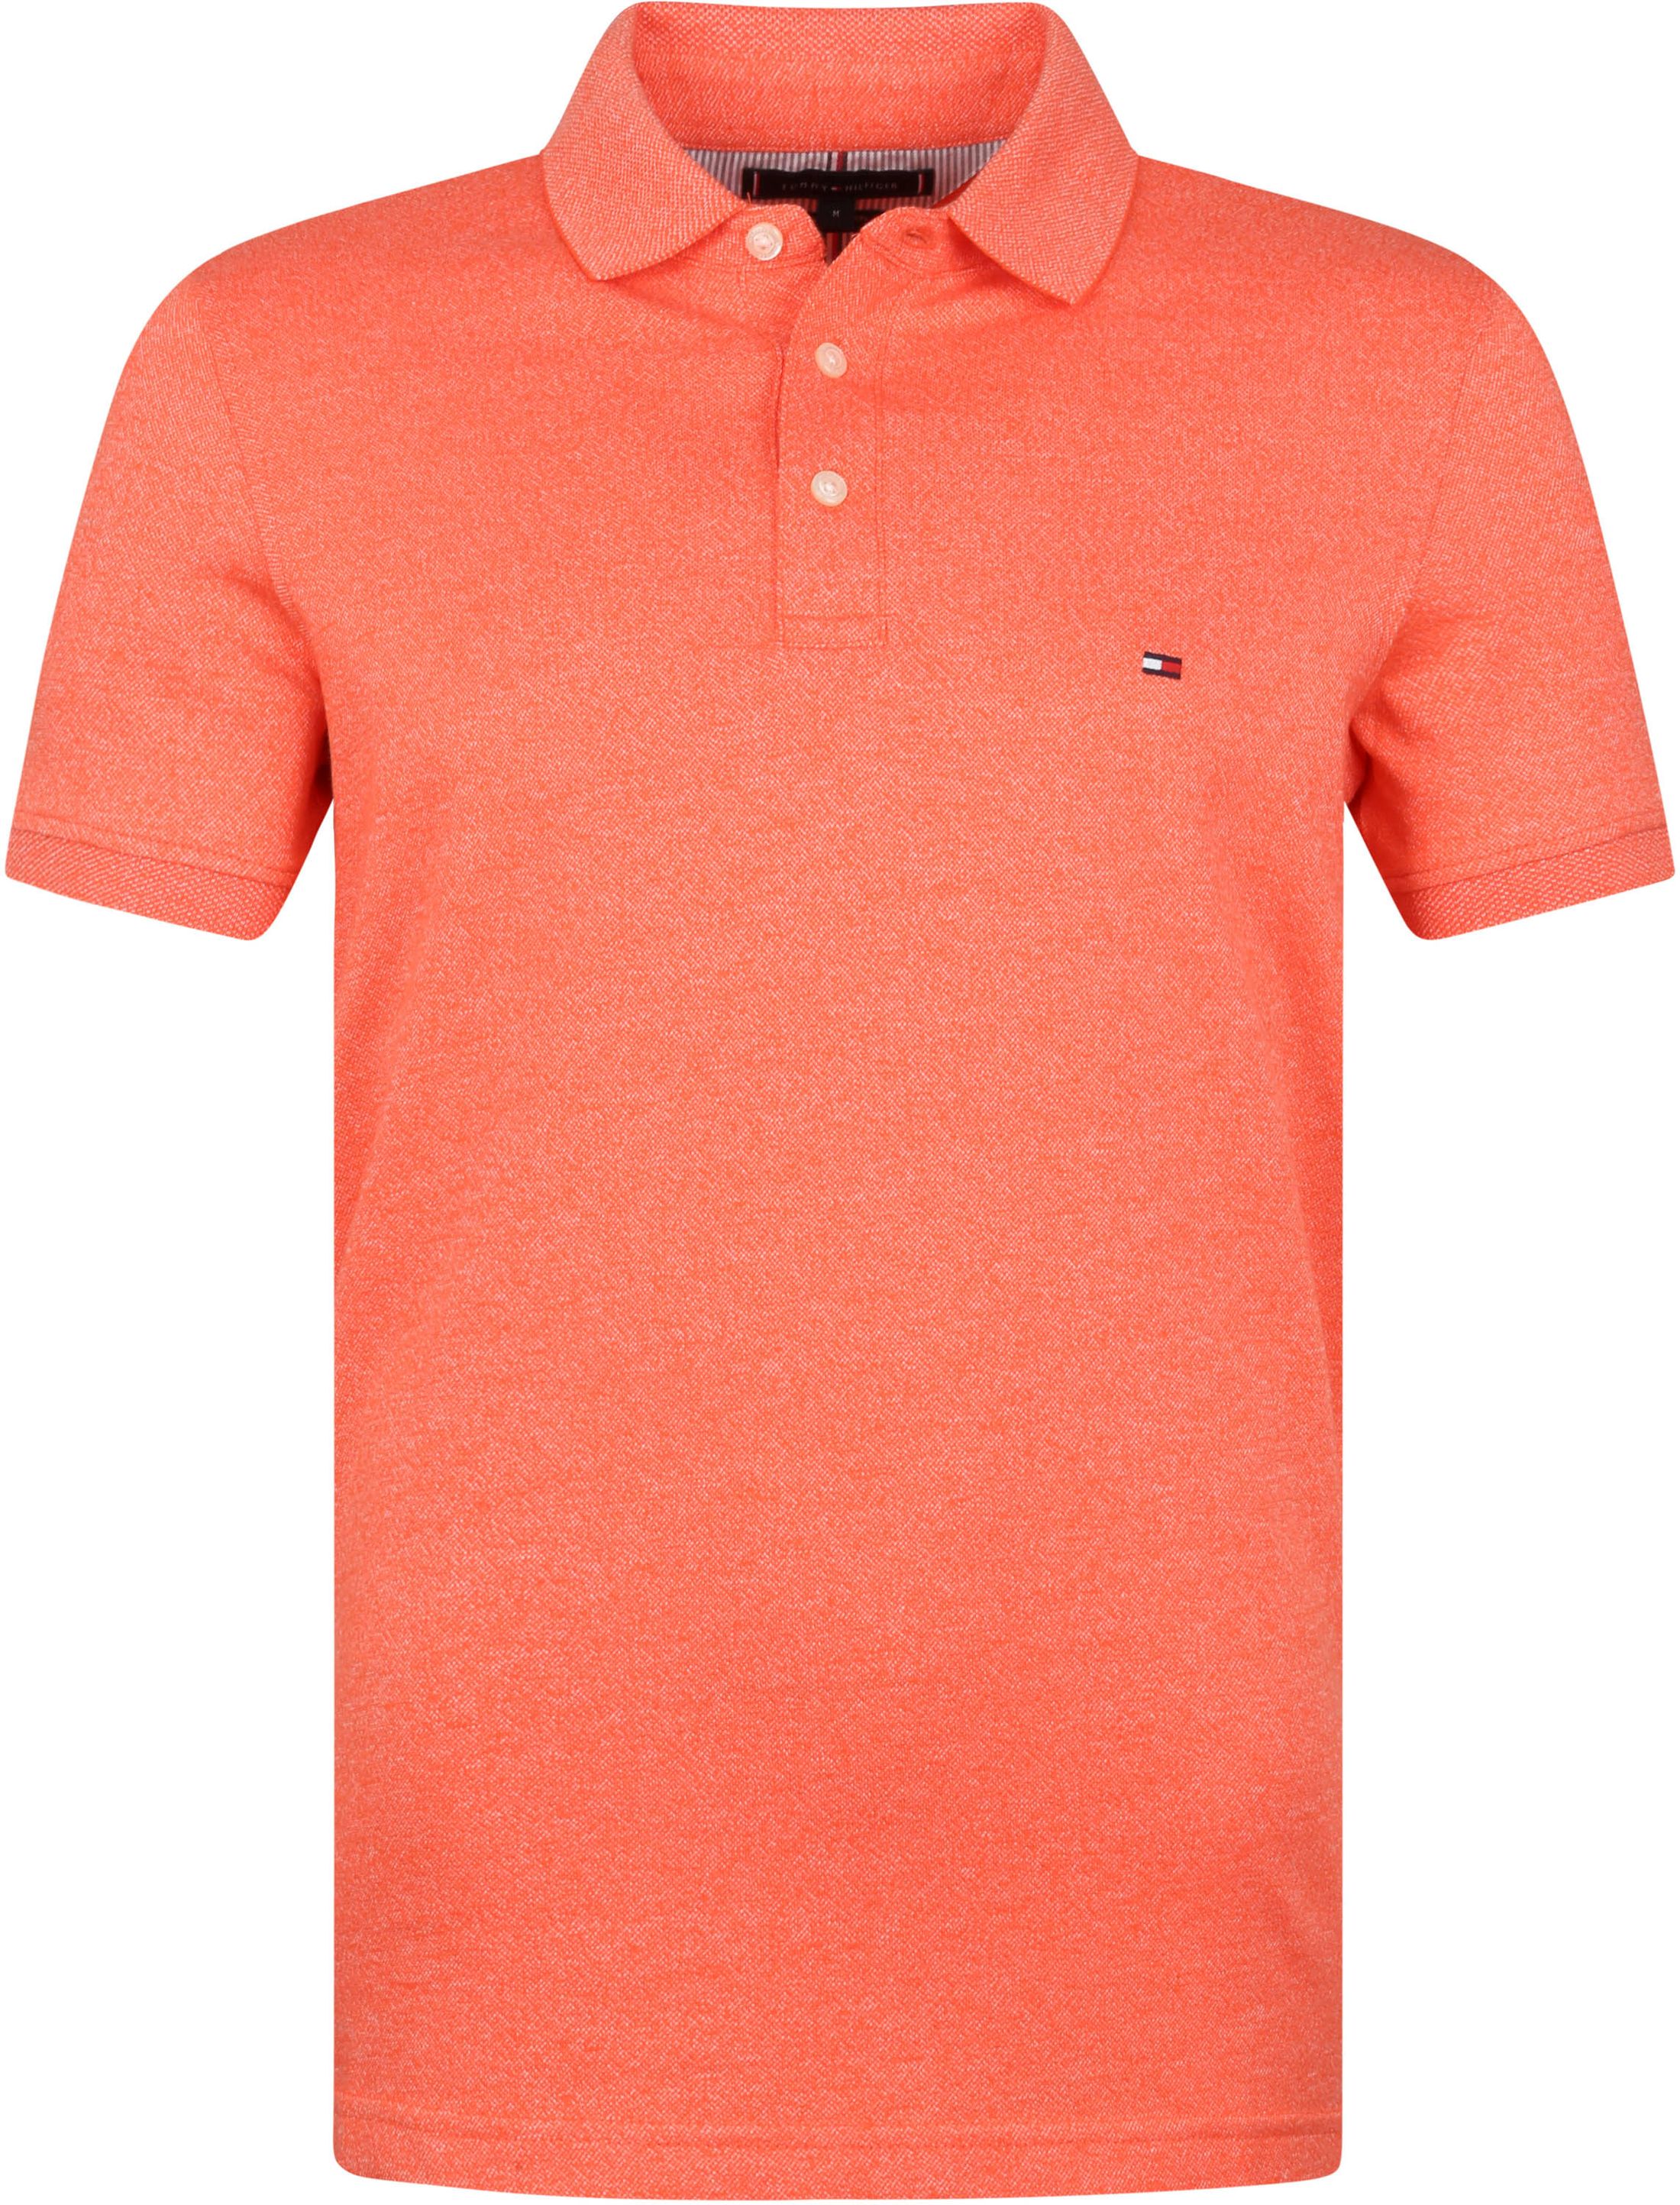 Tommy Hilfiger Polo Shirt Bright Orange size L